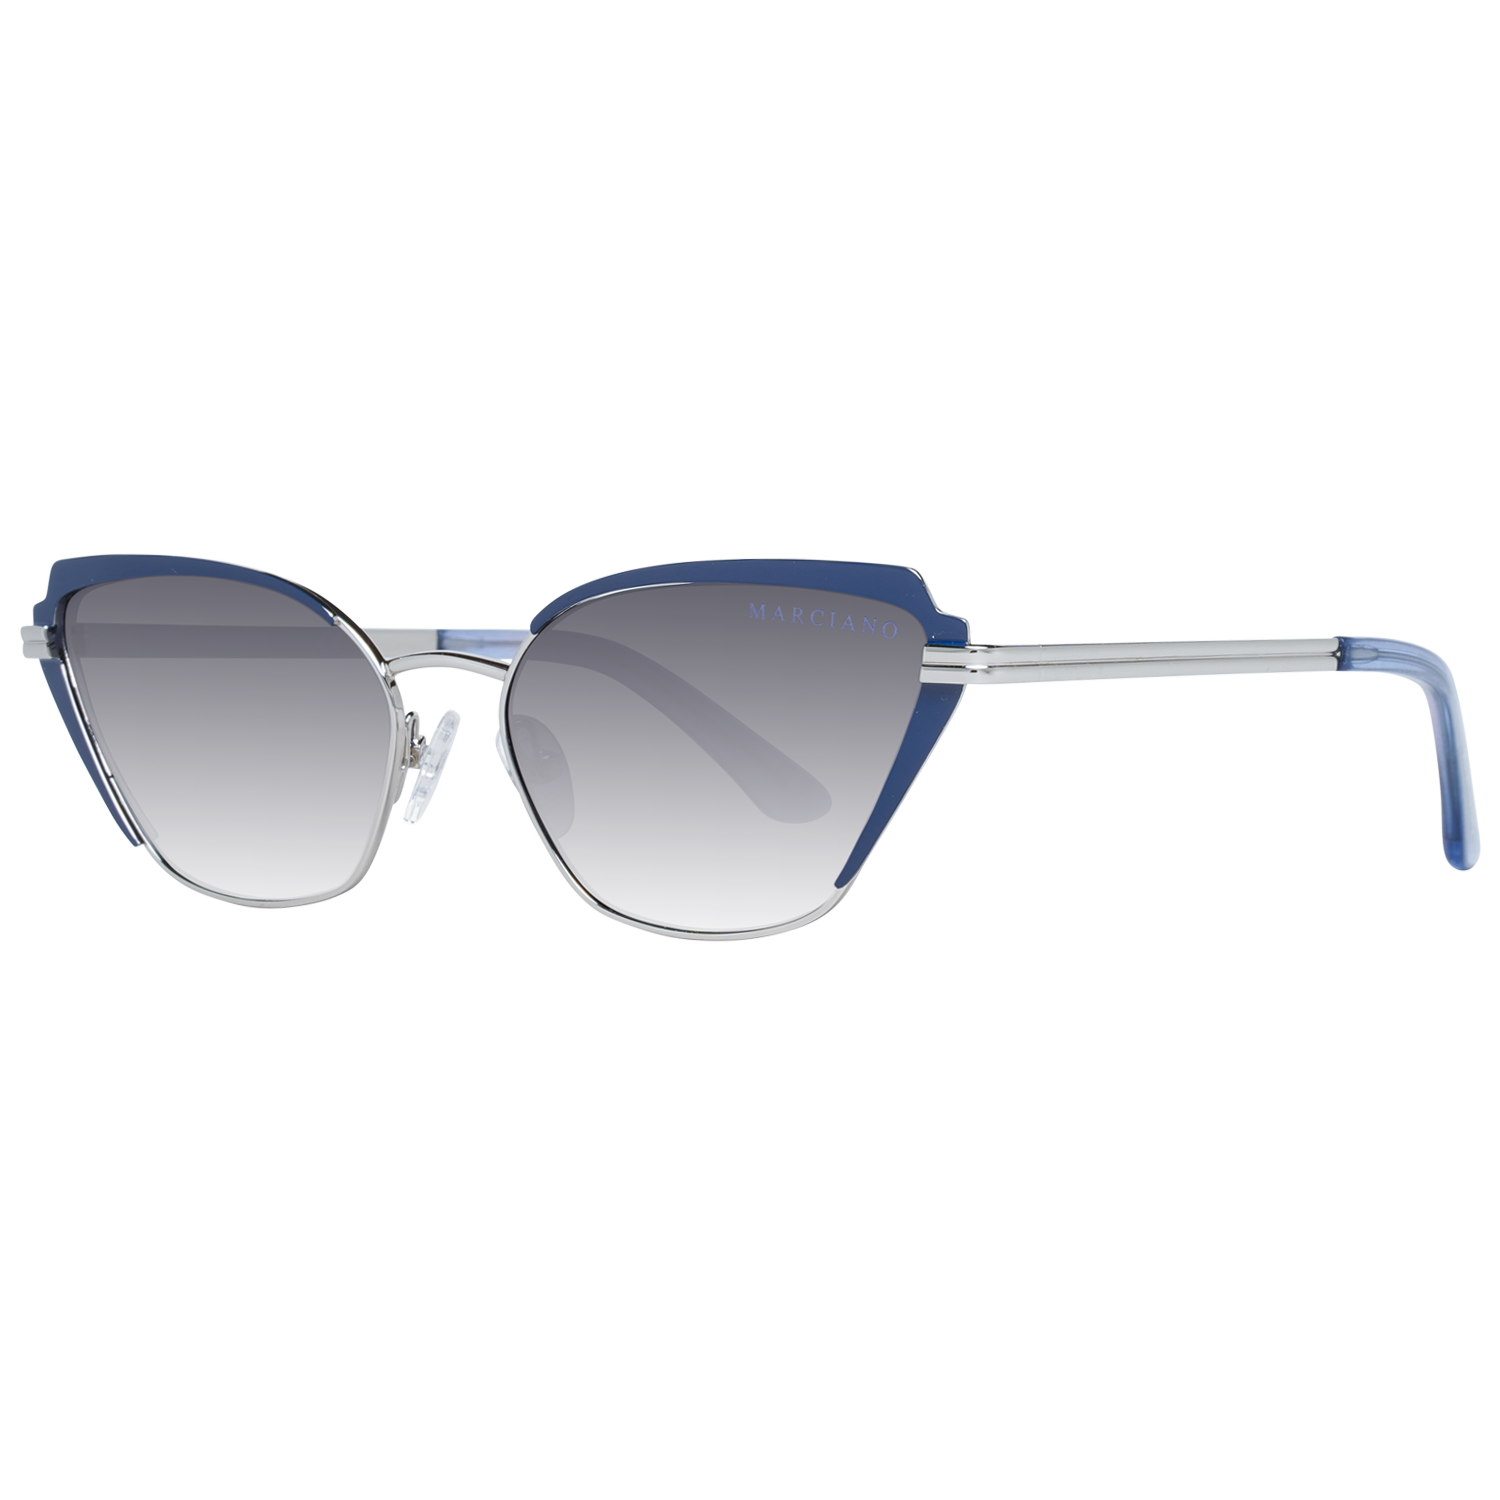 Marciano by Guess Sunglasses Marciano by Guess Sunglasses GM0818 10W 56 Eyeglasses Eyewear UK USA Australia 